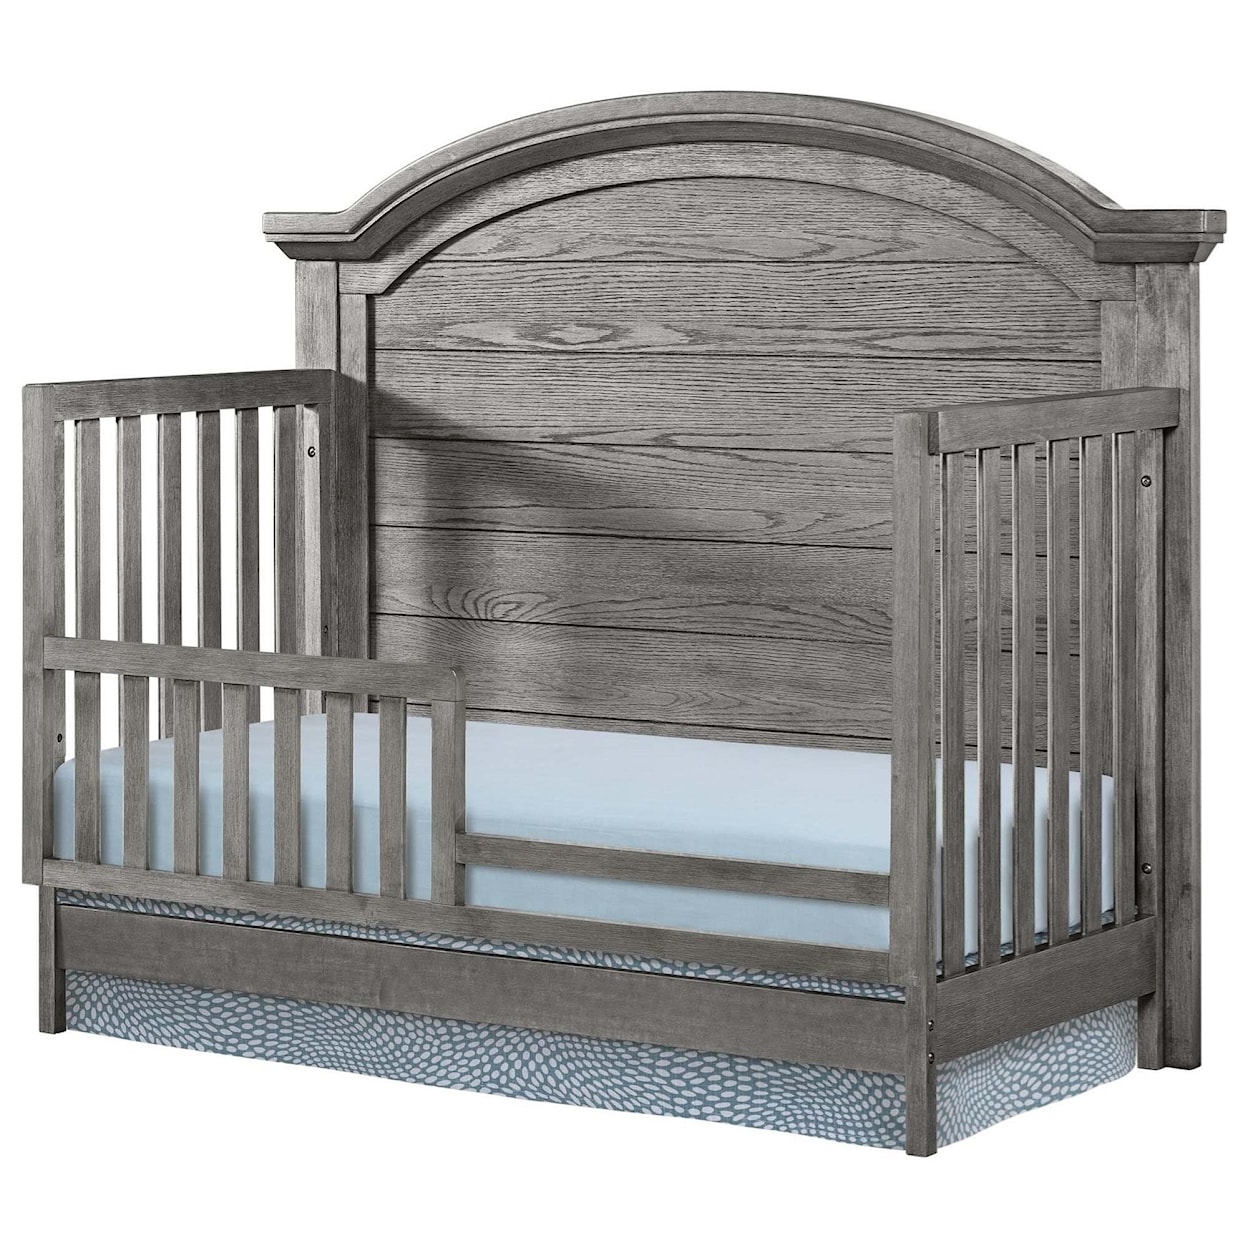 Westwood Design Foundry Toddler Bed Converter Rail